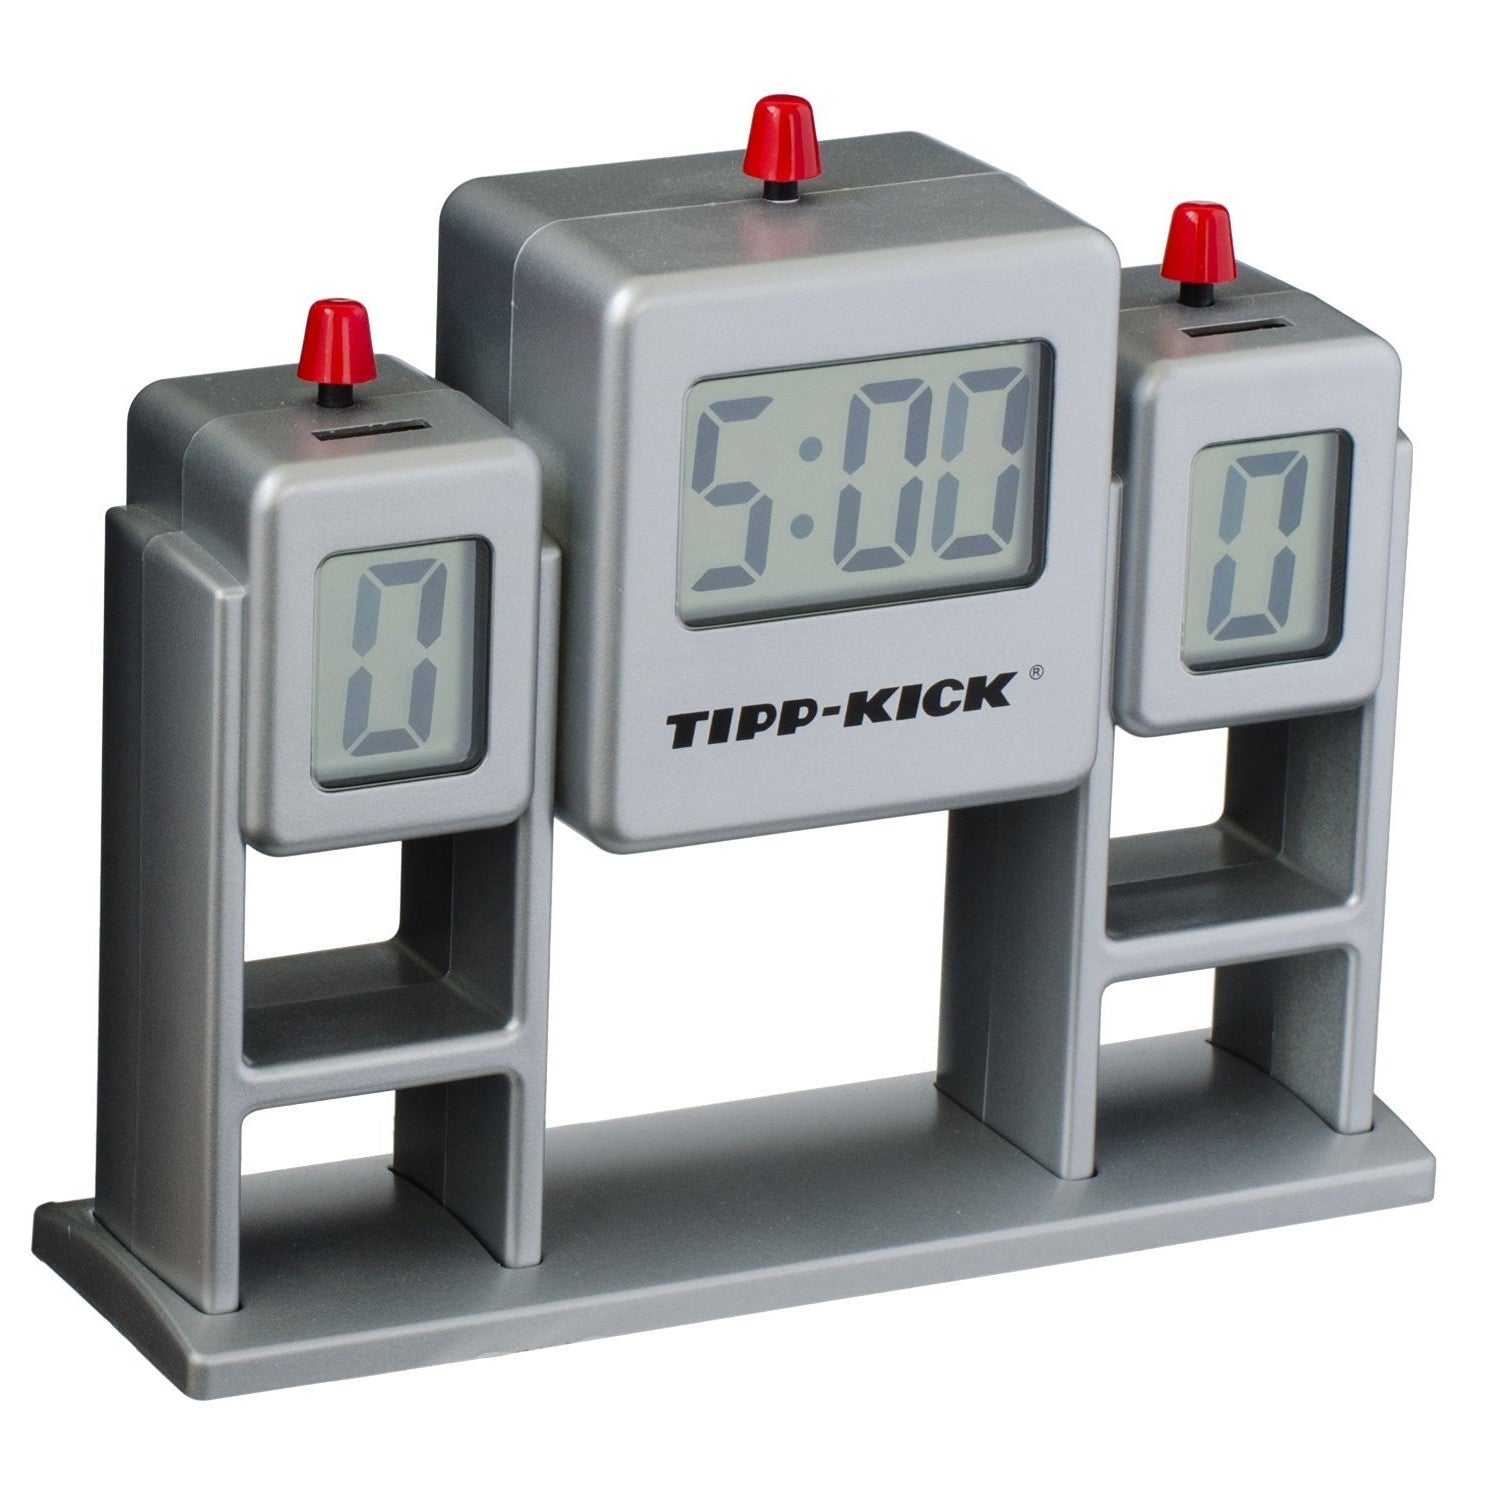 TIPP-KICK Match Timer, Score Board & Sound-Chip Module for Soccer Games